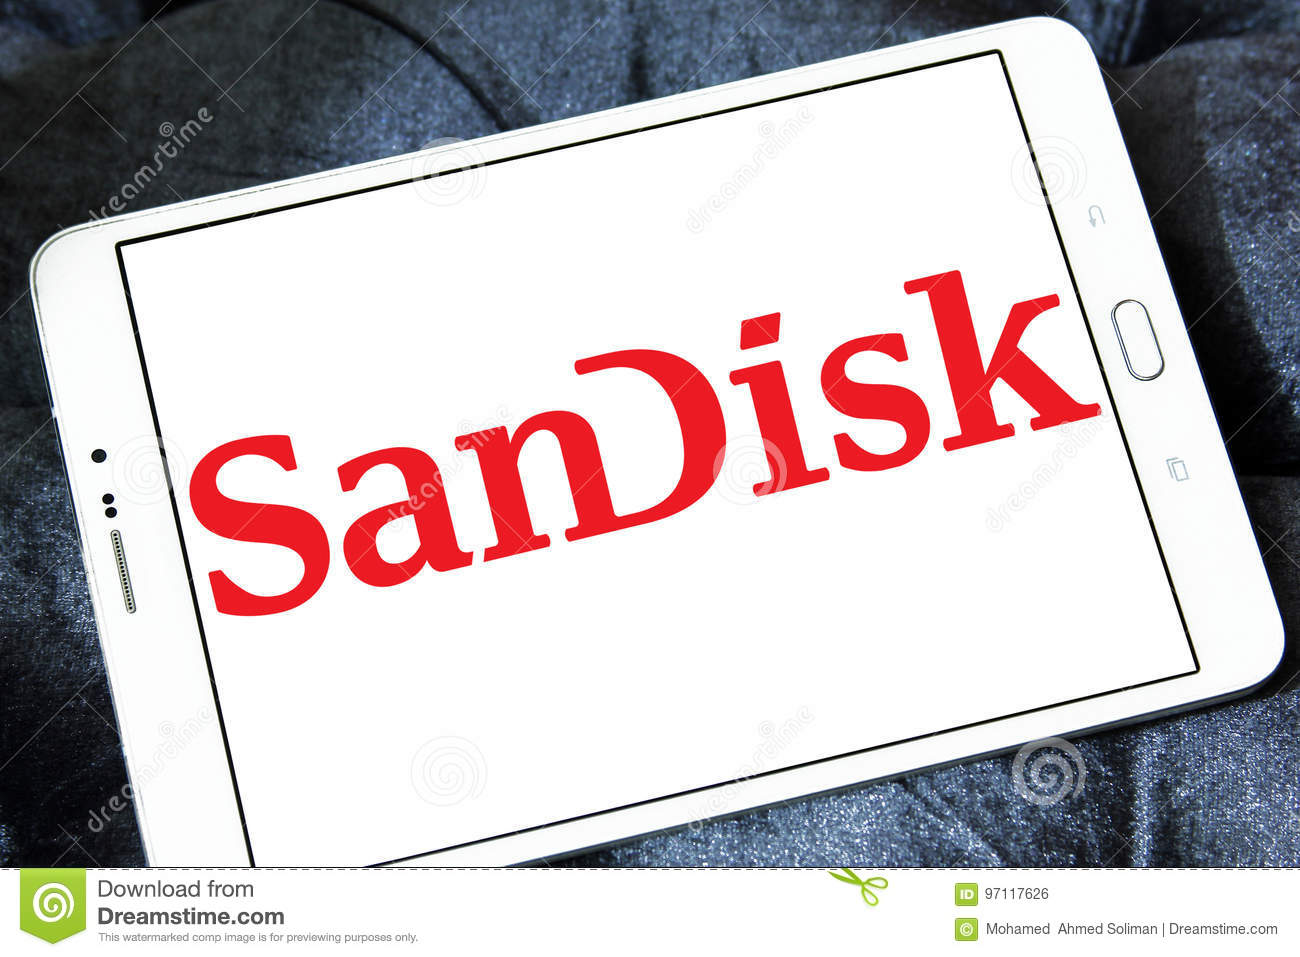 sandisk-logo-company-samsung-tablet-american-manufacturer-flash-memory-products-97117626